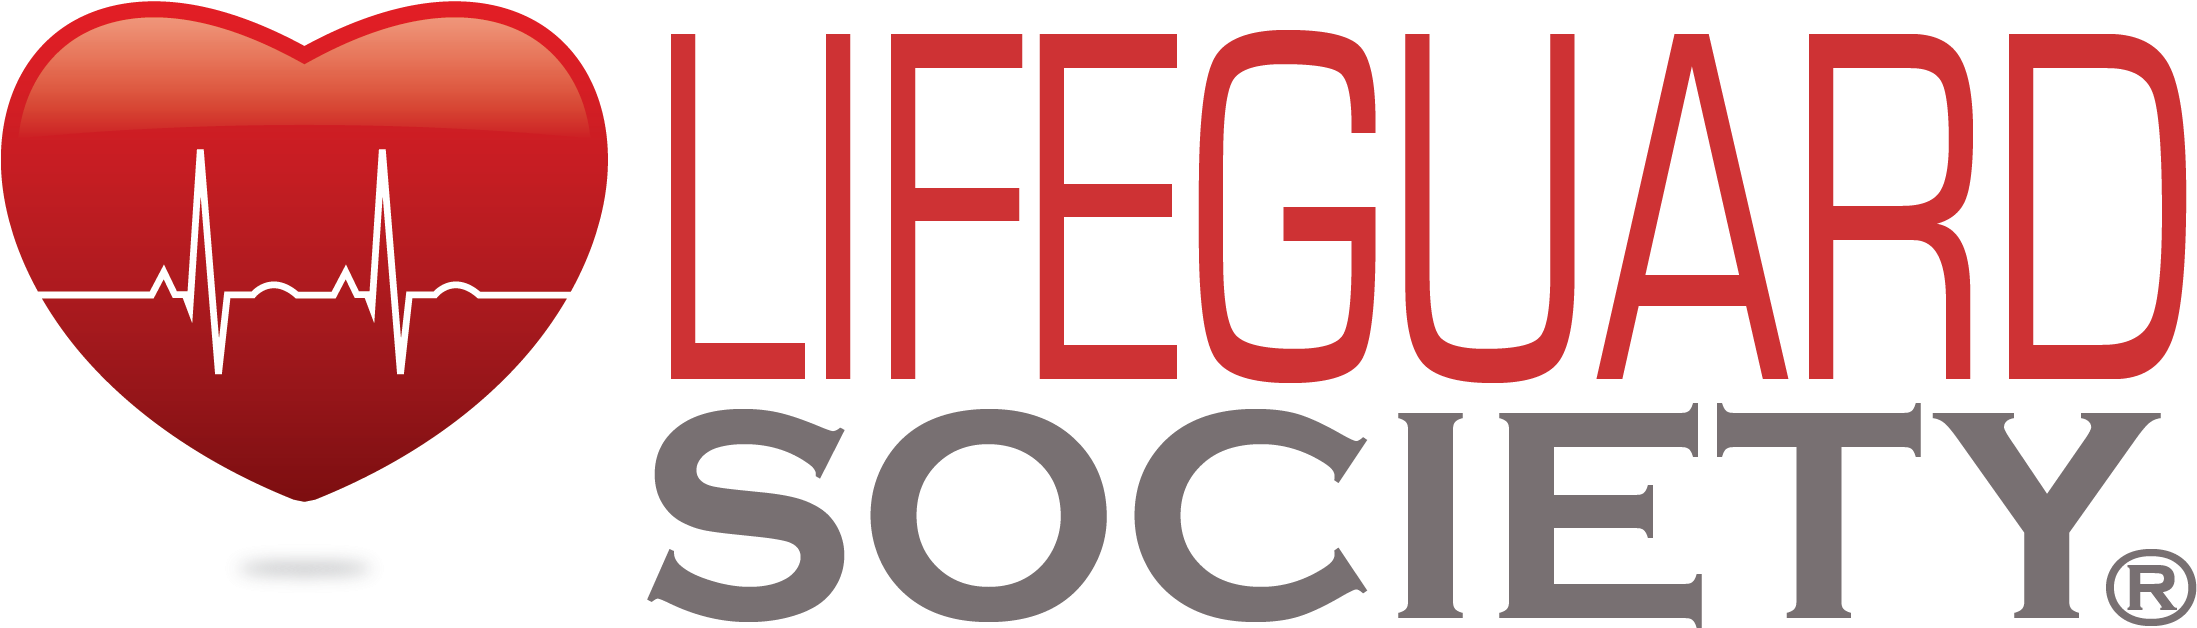 Lifeguard Society Logo - Top Secret (2200x777)